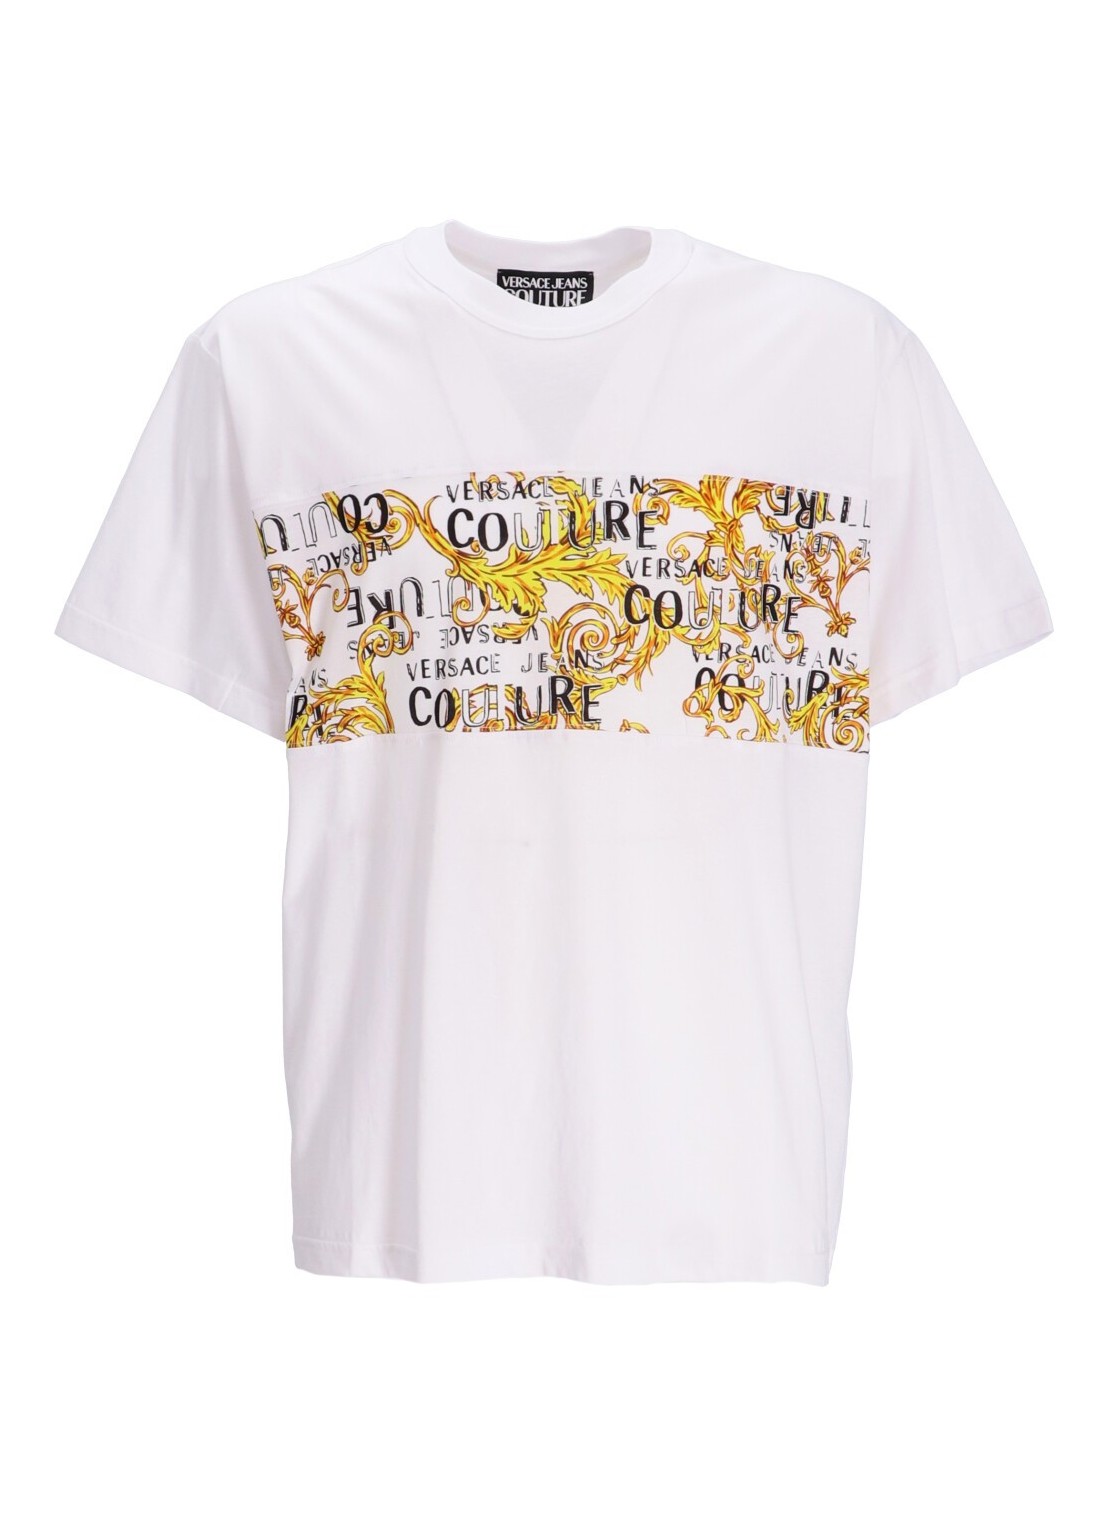 Camiseta versace t-shirt man 74up601 r contr logo baroque t-shirt 74gah617 g03 talla M
 